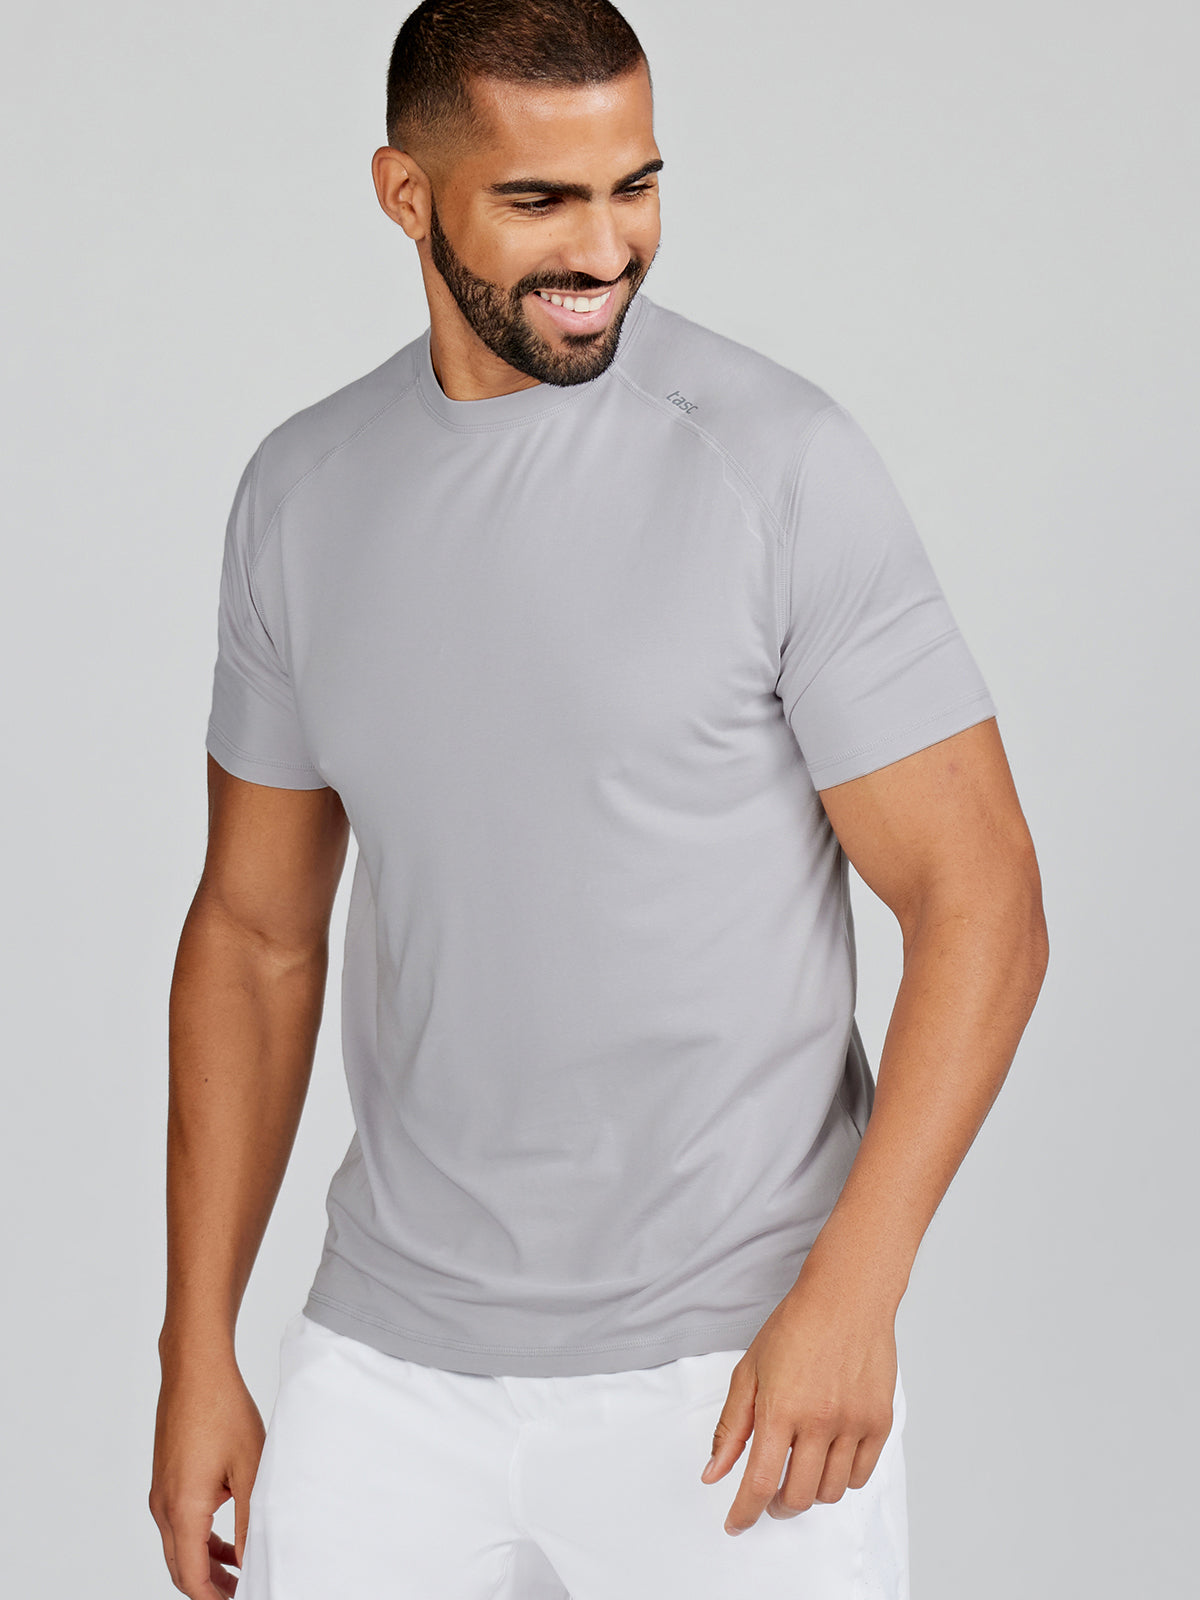 Carrollton Fitness T-Shirt - Seasonal (Silver)